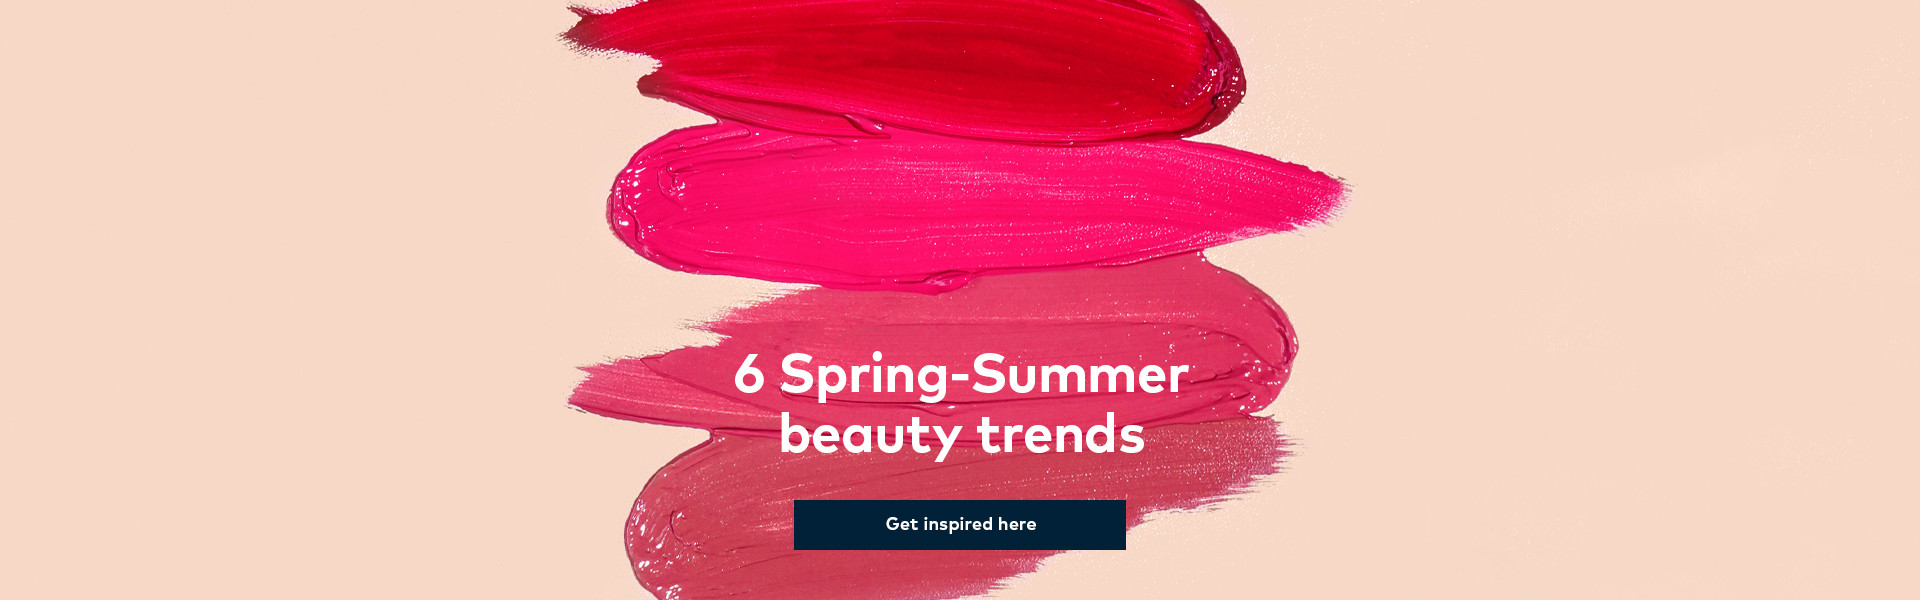 Spring-summer beauty trends